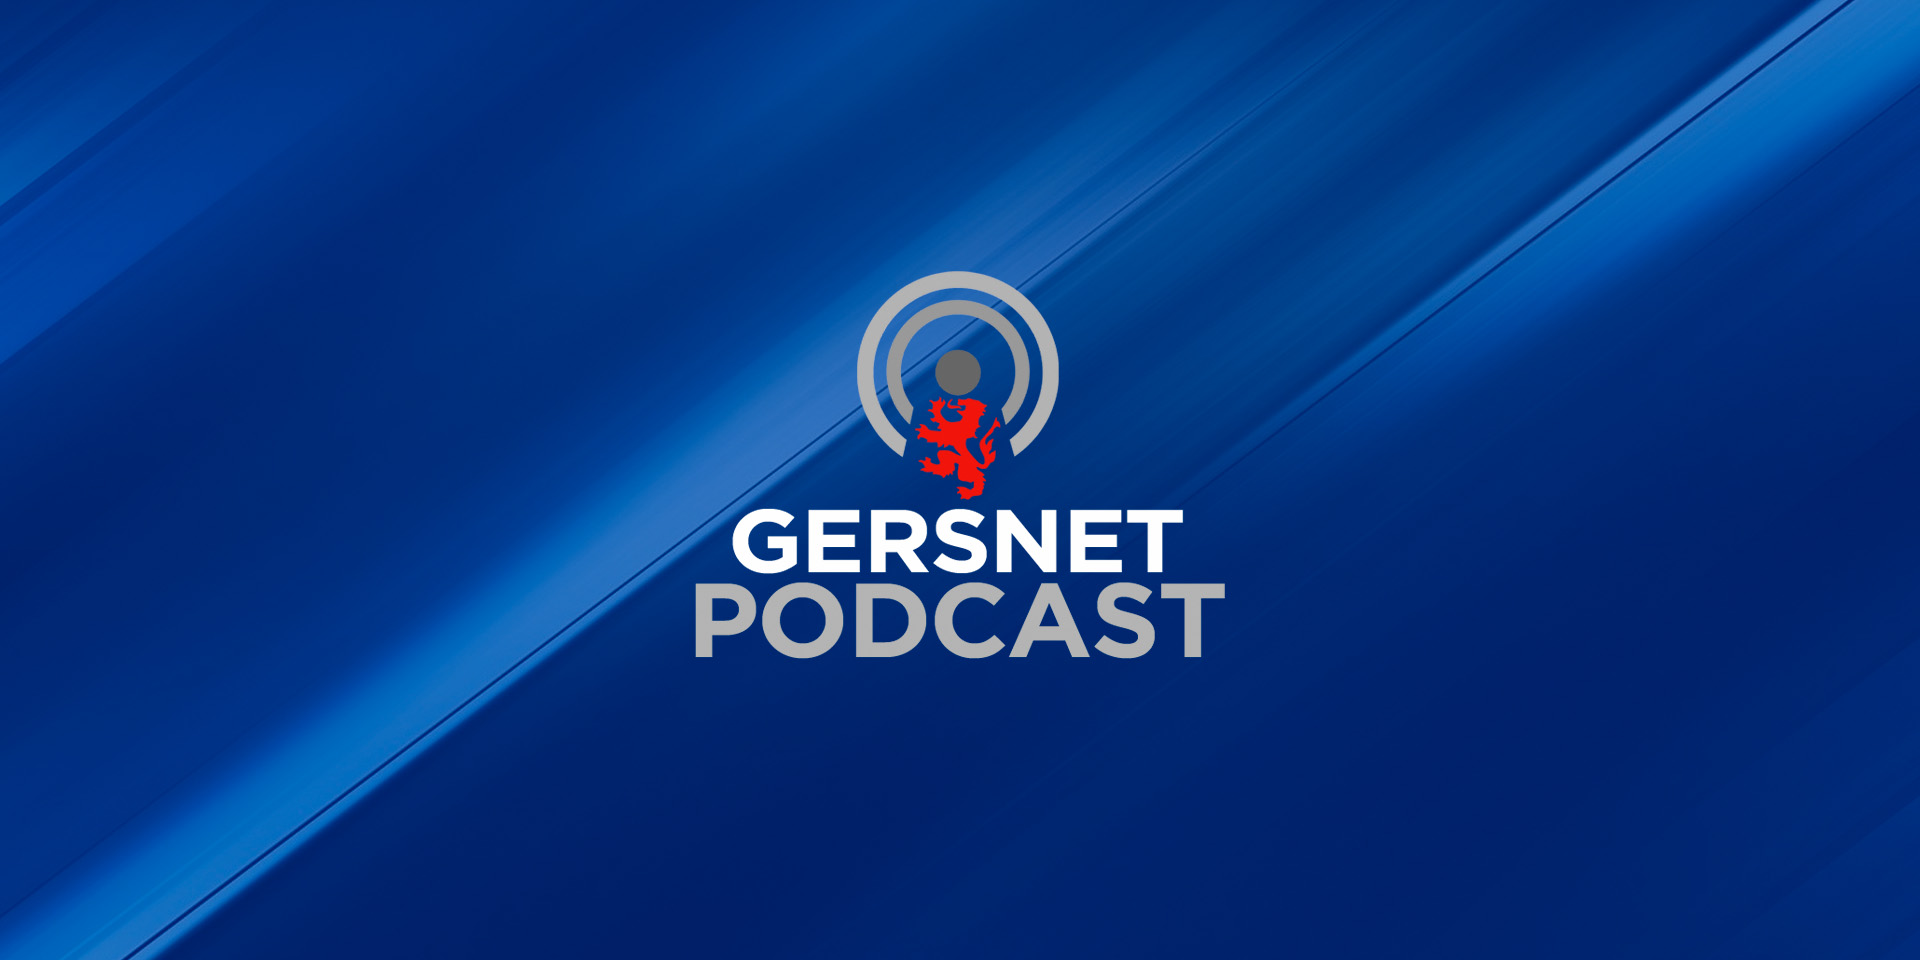 Gersnet Podcast 274 - Kilmarnock Preview